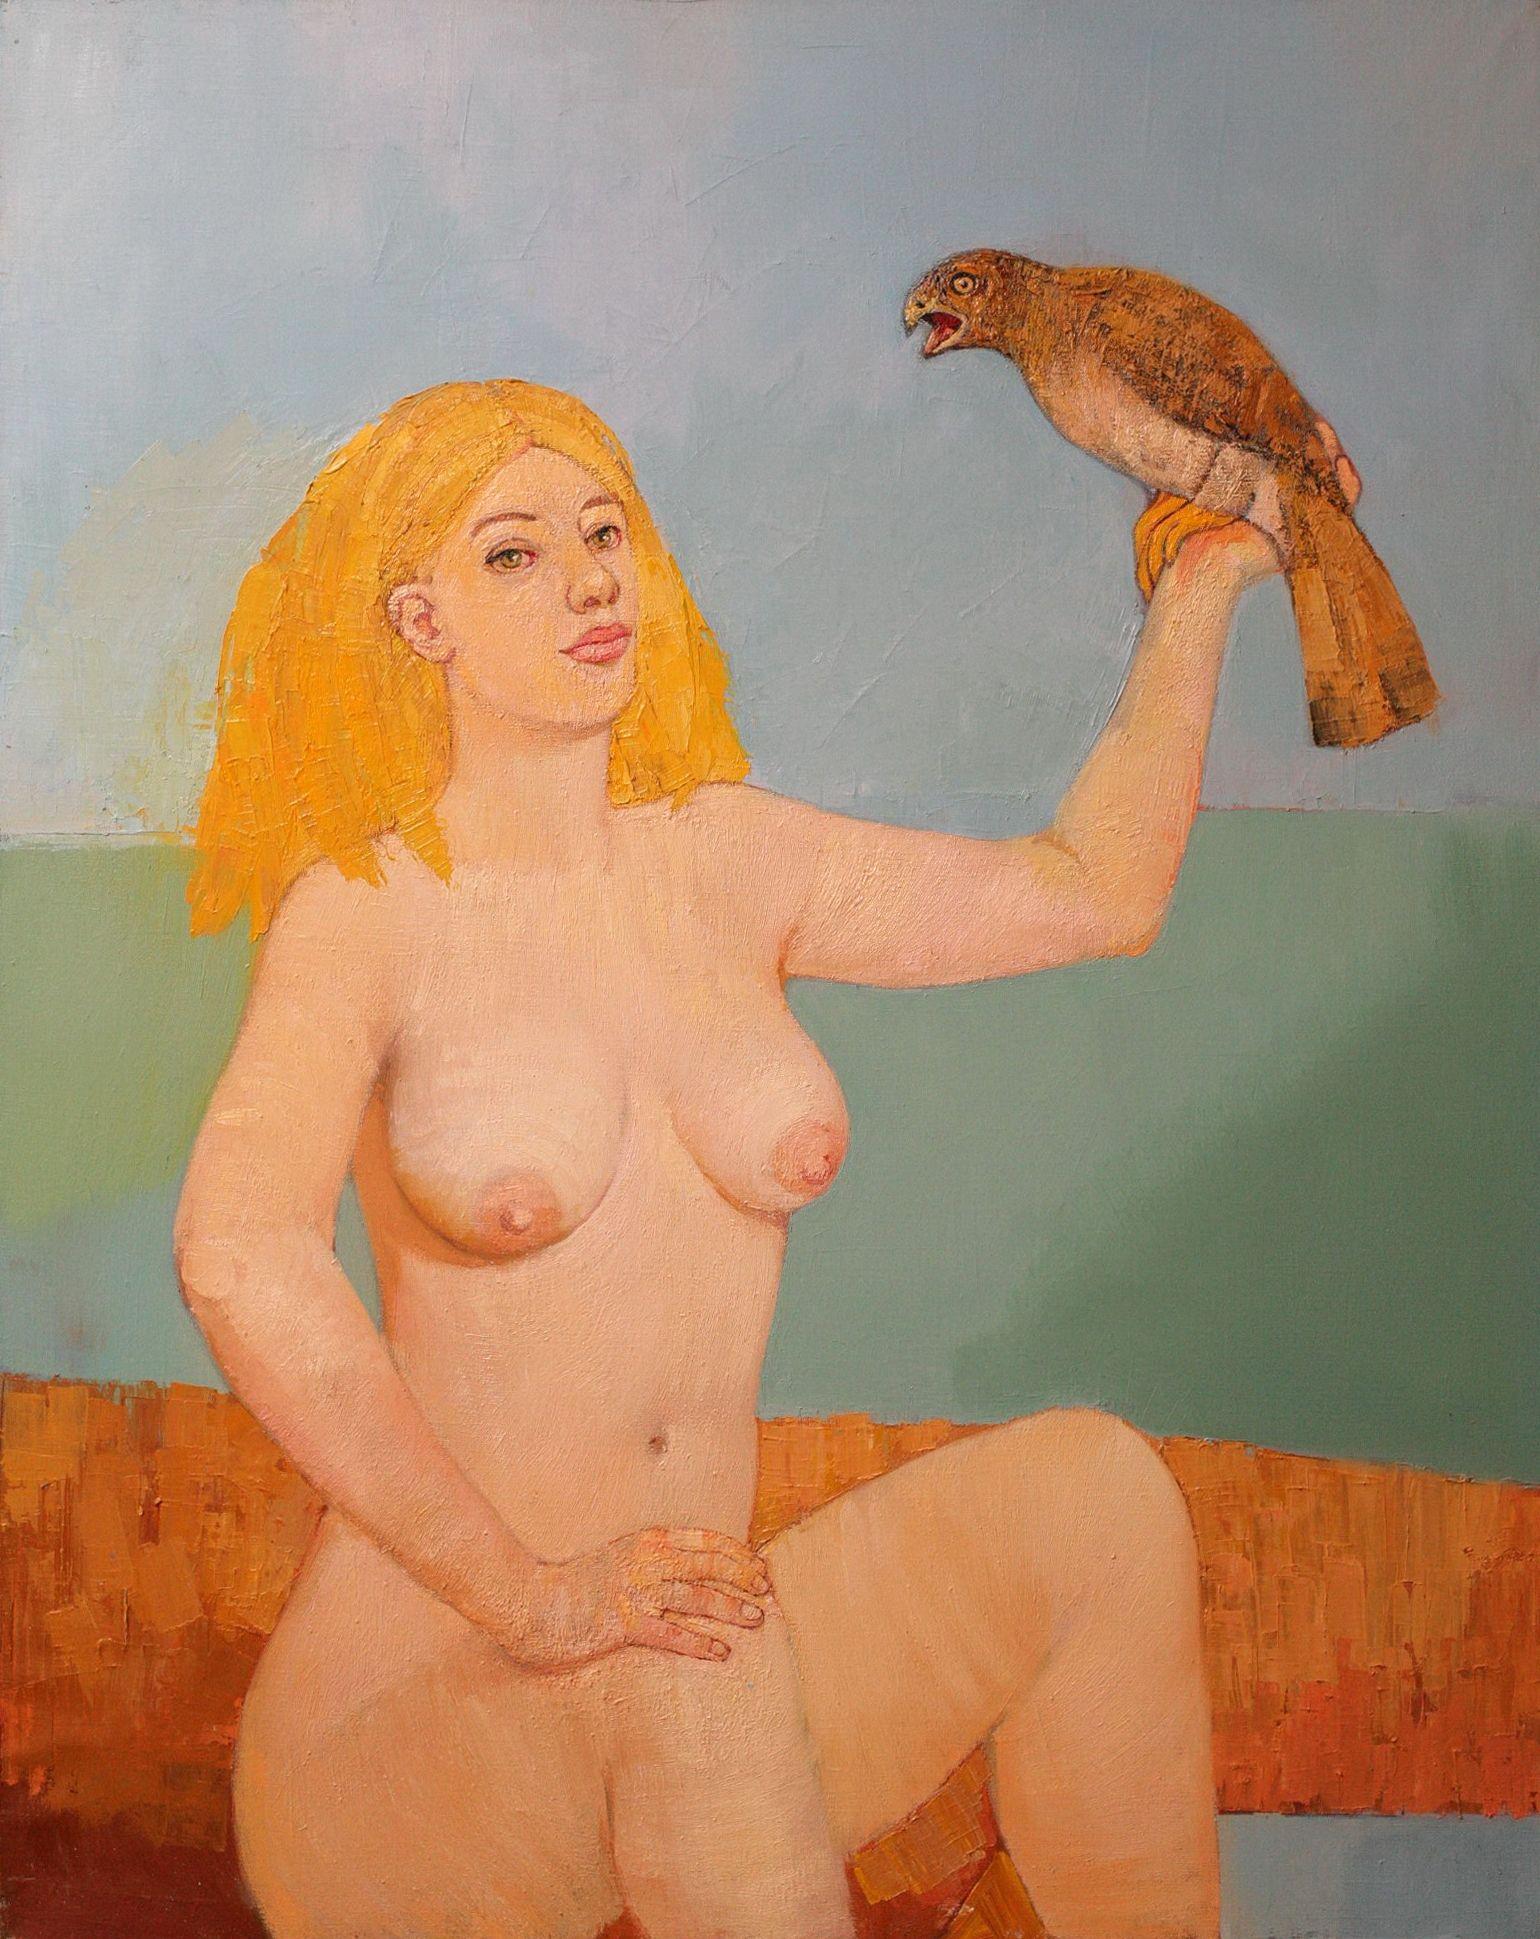 Girl with a hawk. Oil on canvas, 80x60 cm